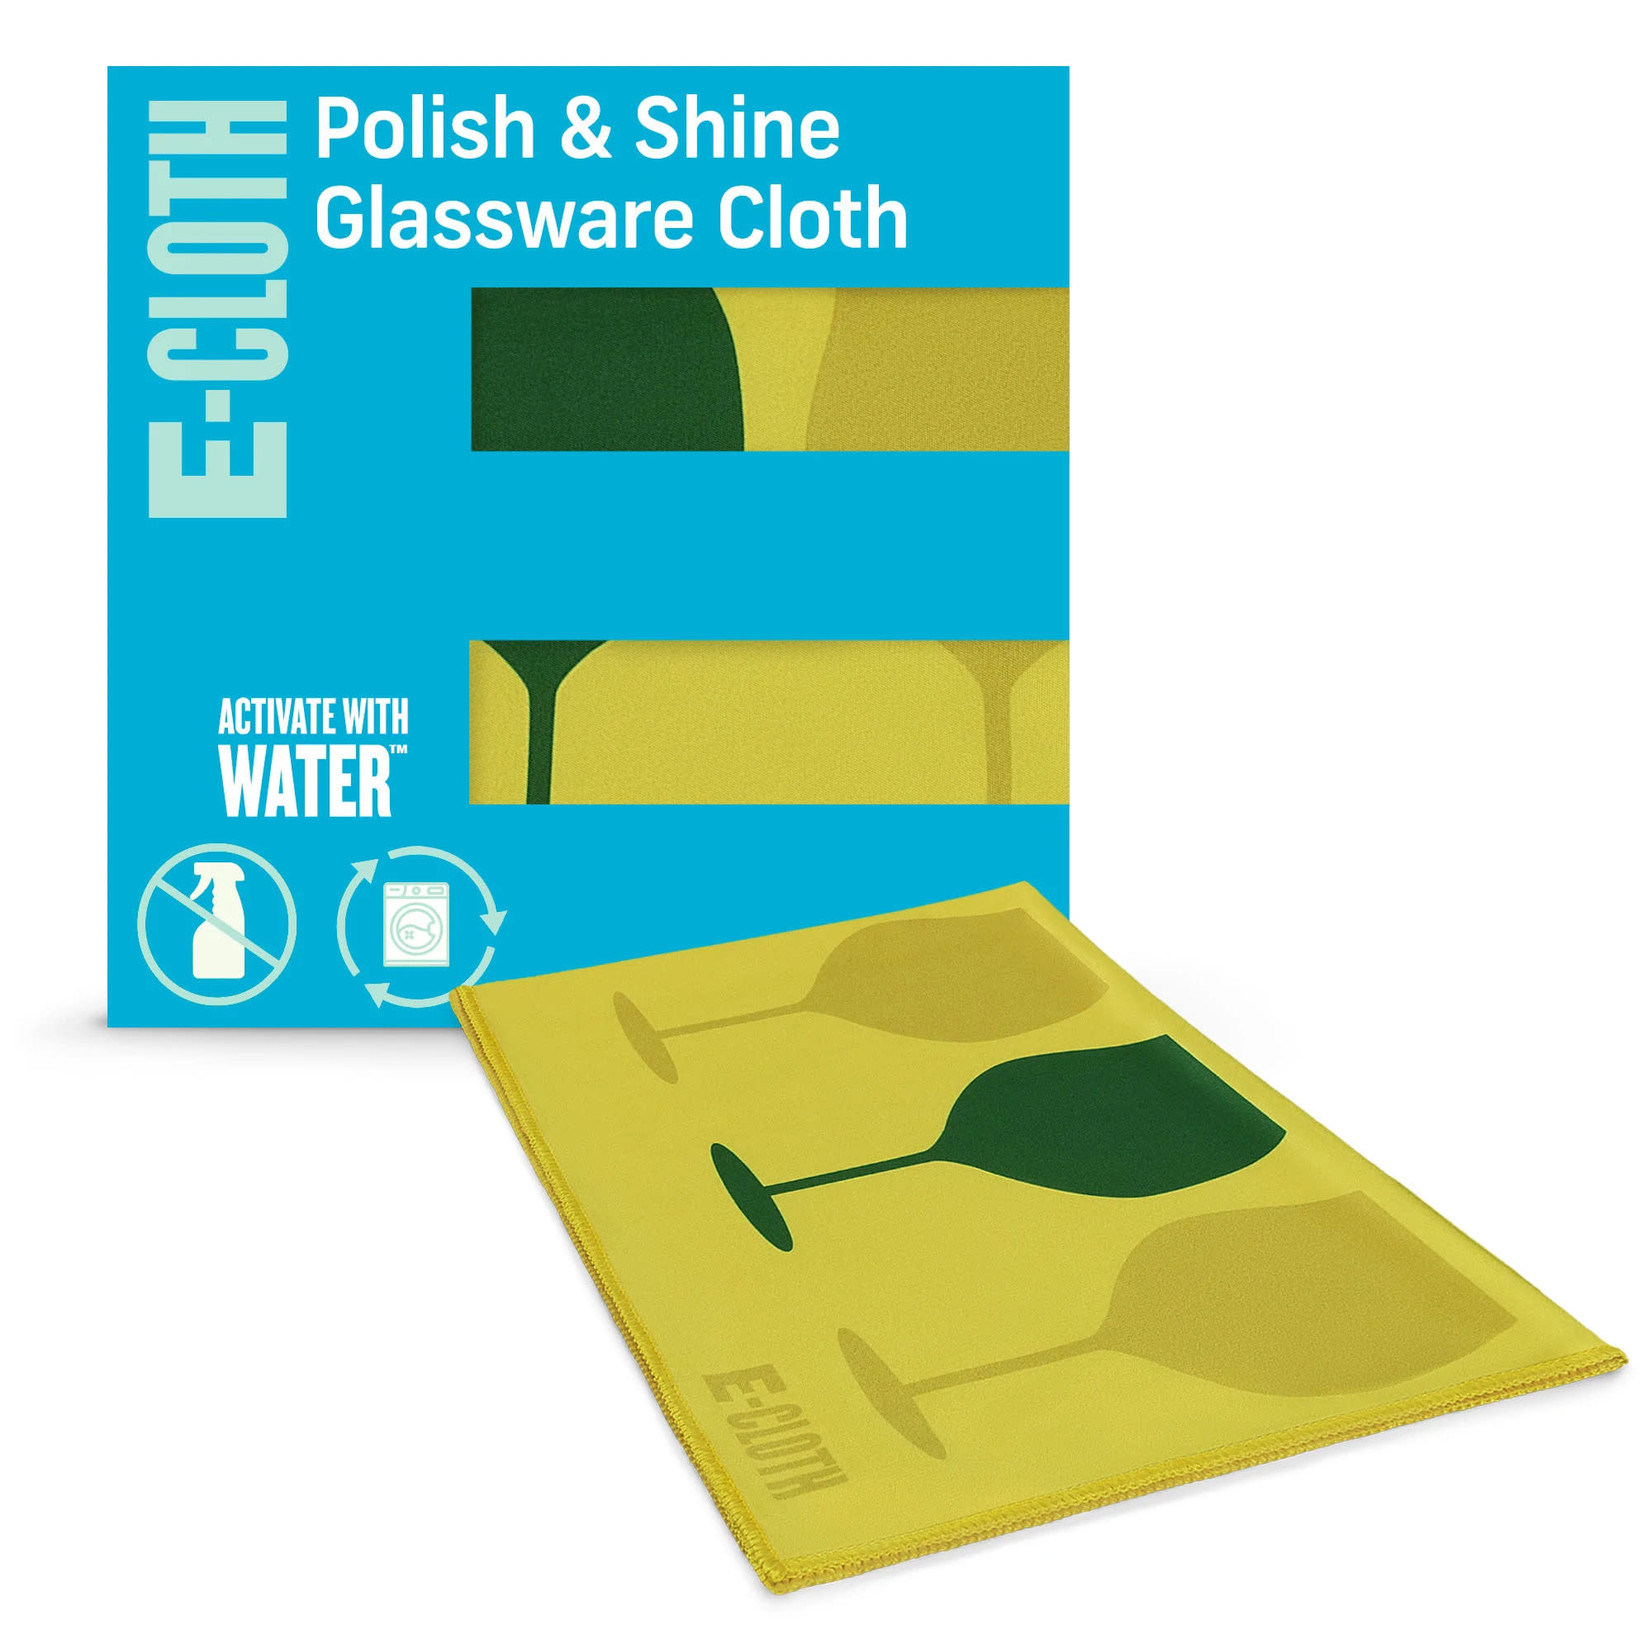 e-cloth Polish & Shine Glassware Cloth